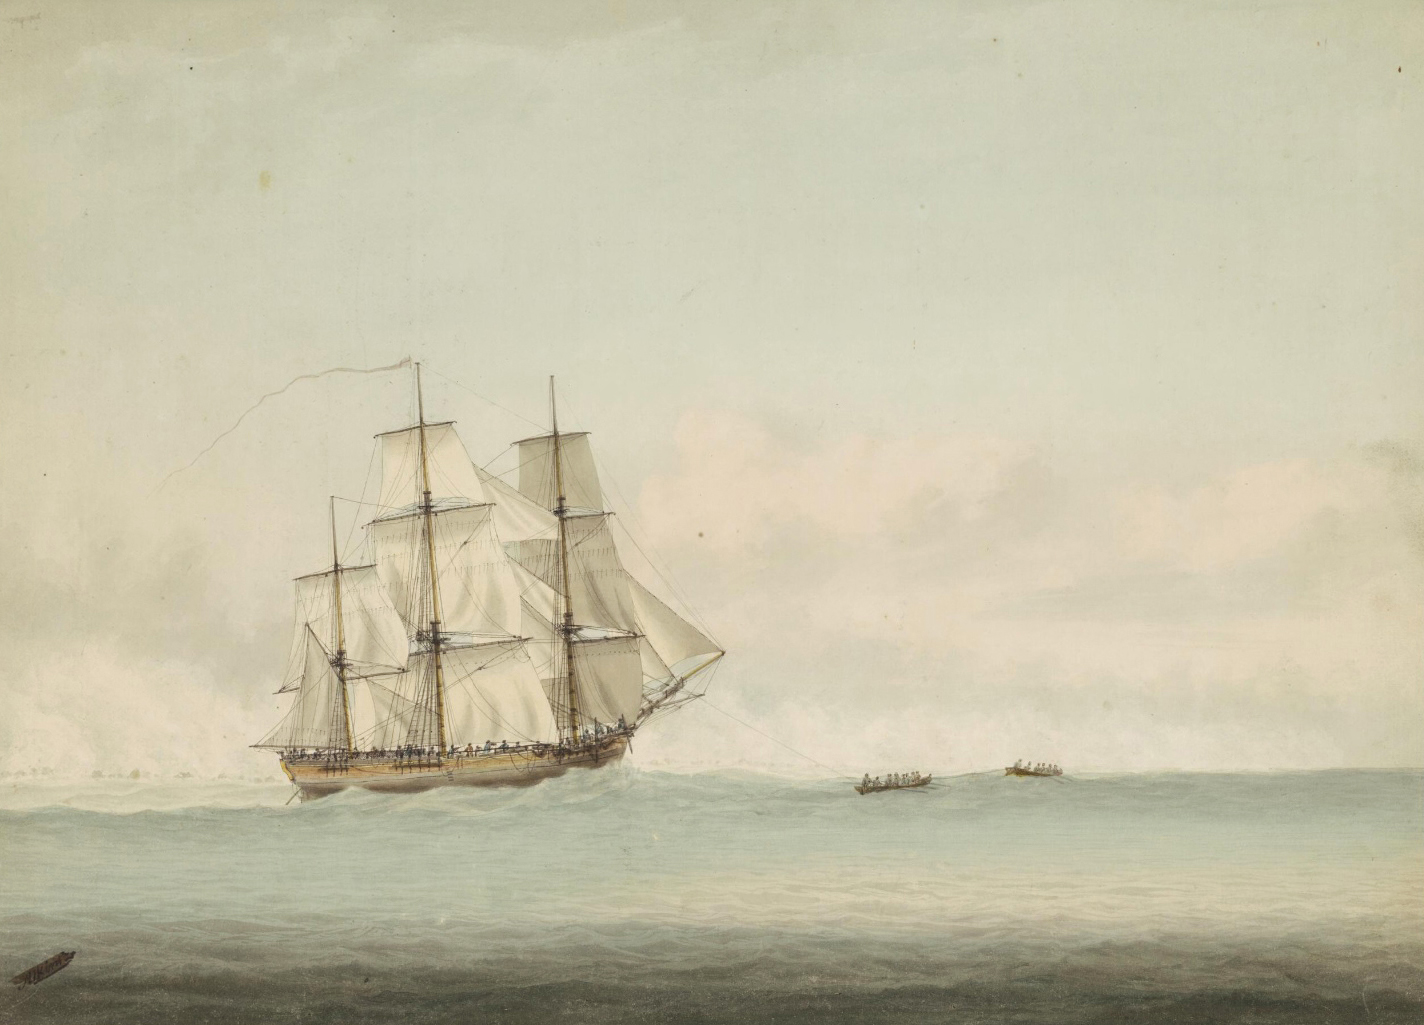 El HMS Endeavour, el barco del Capitán Cook con el que llegó a Australia.